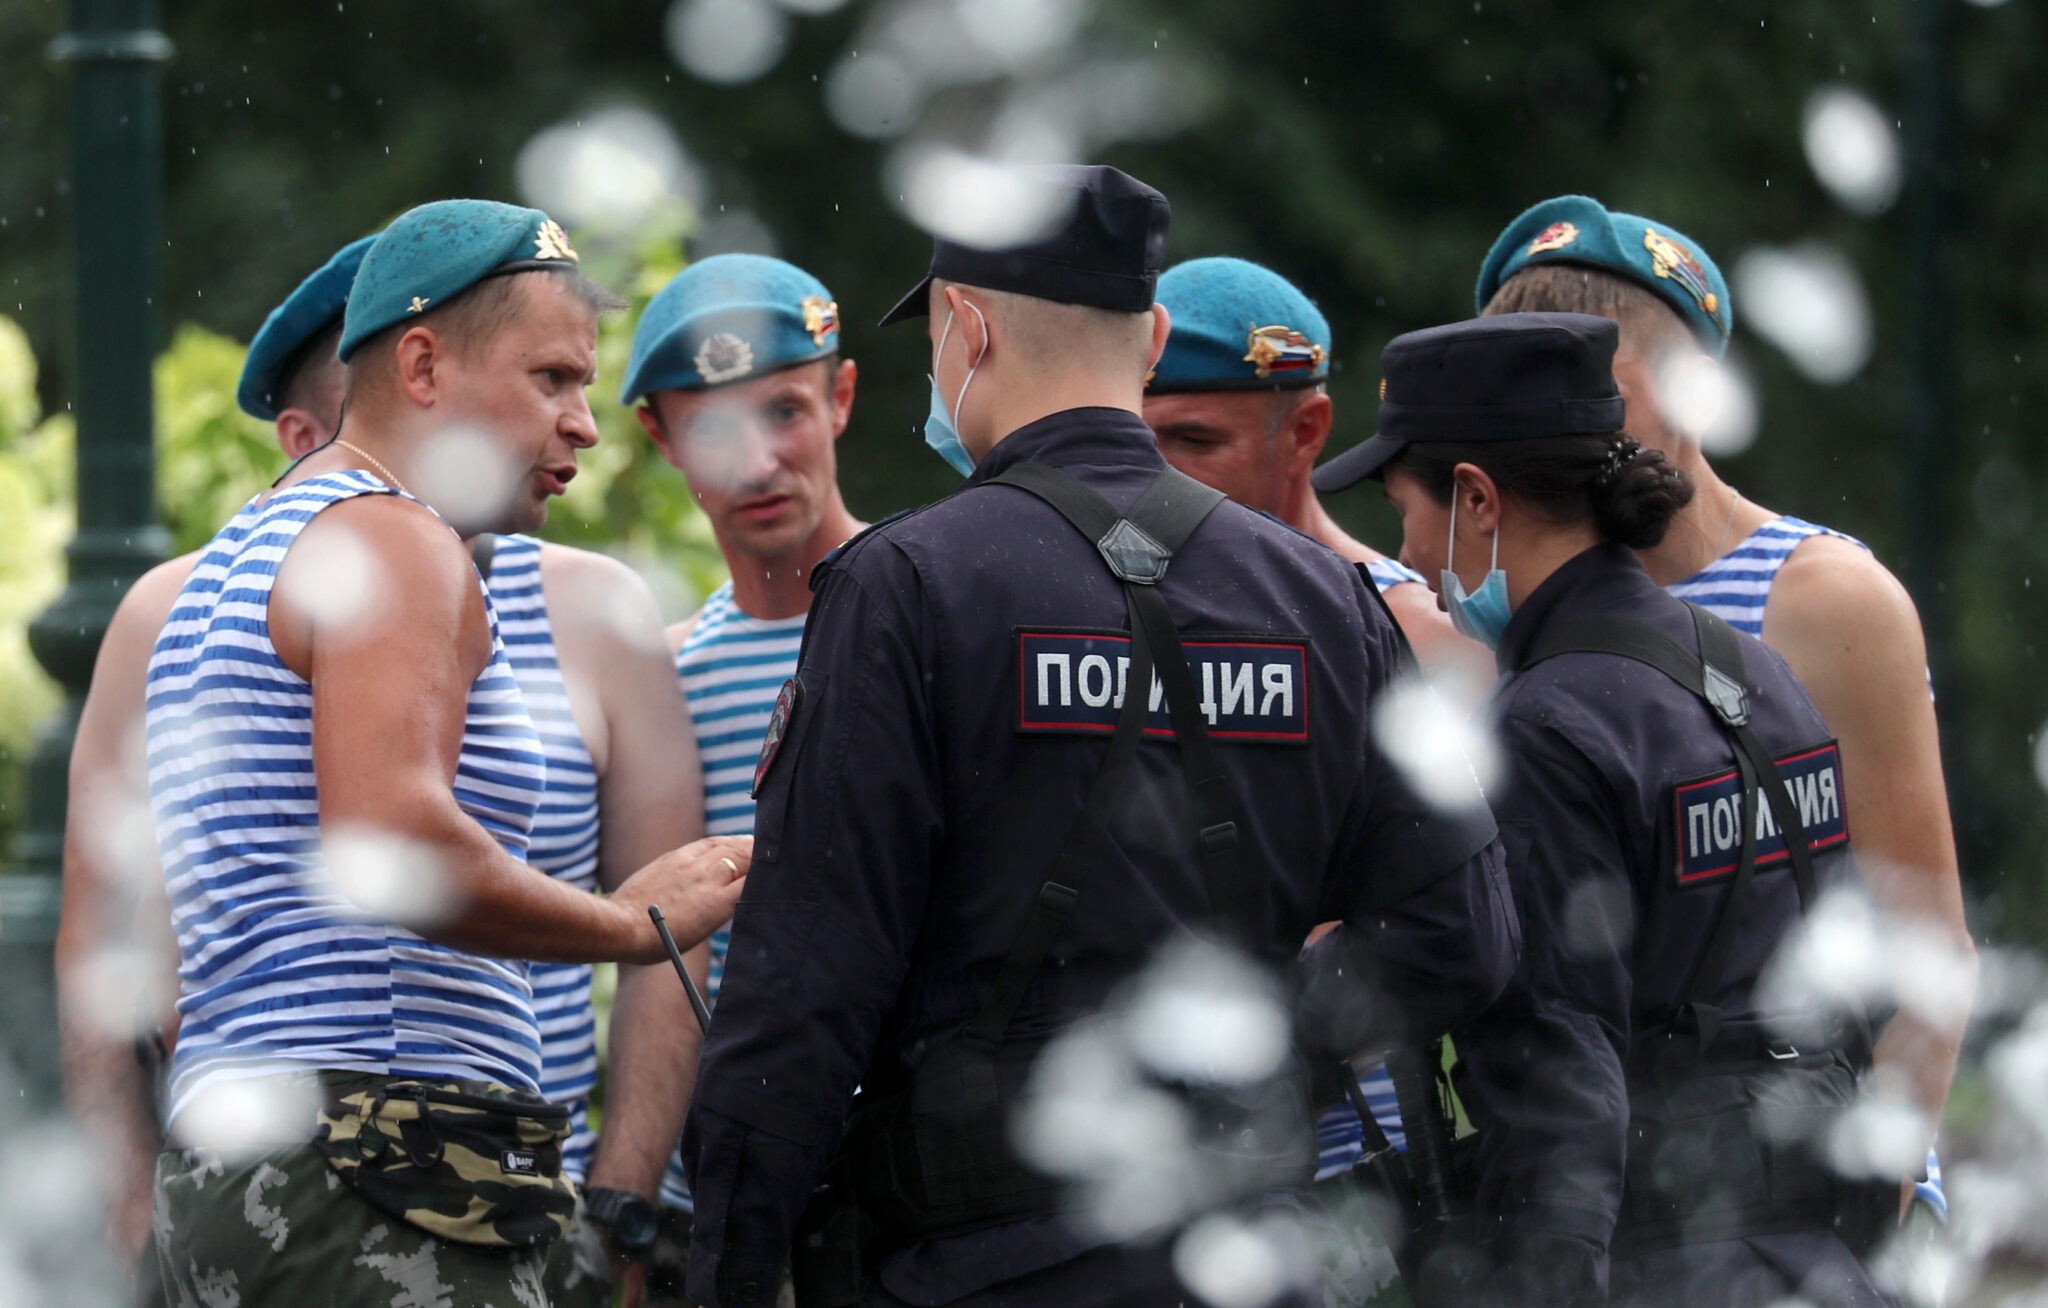 Празднующие Дня ВДВ и полиция в Москве. Фото  Sergei Fadeichev/TASS/Scanpix/Leta